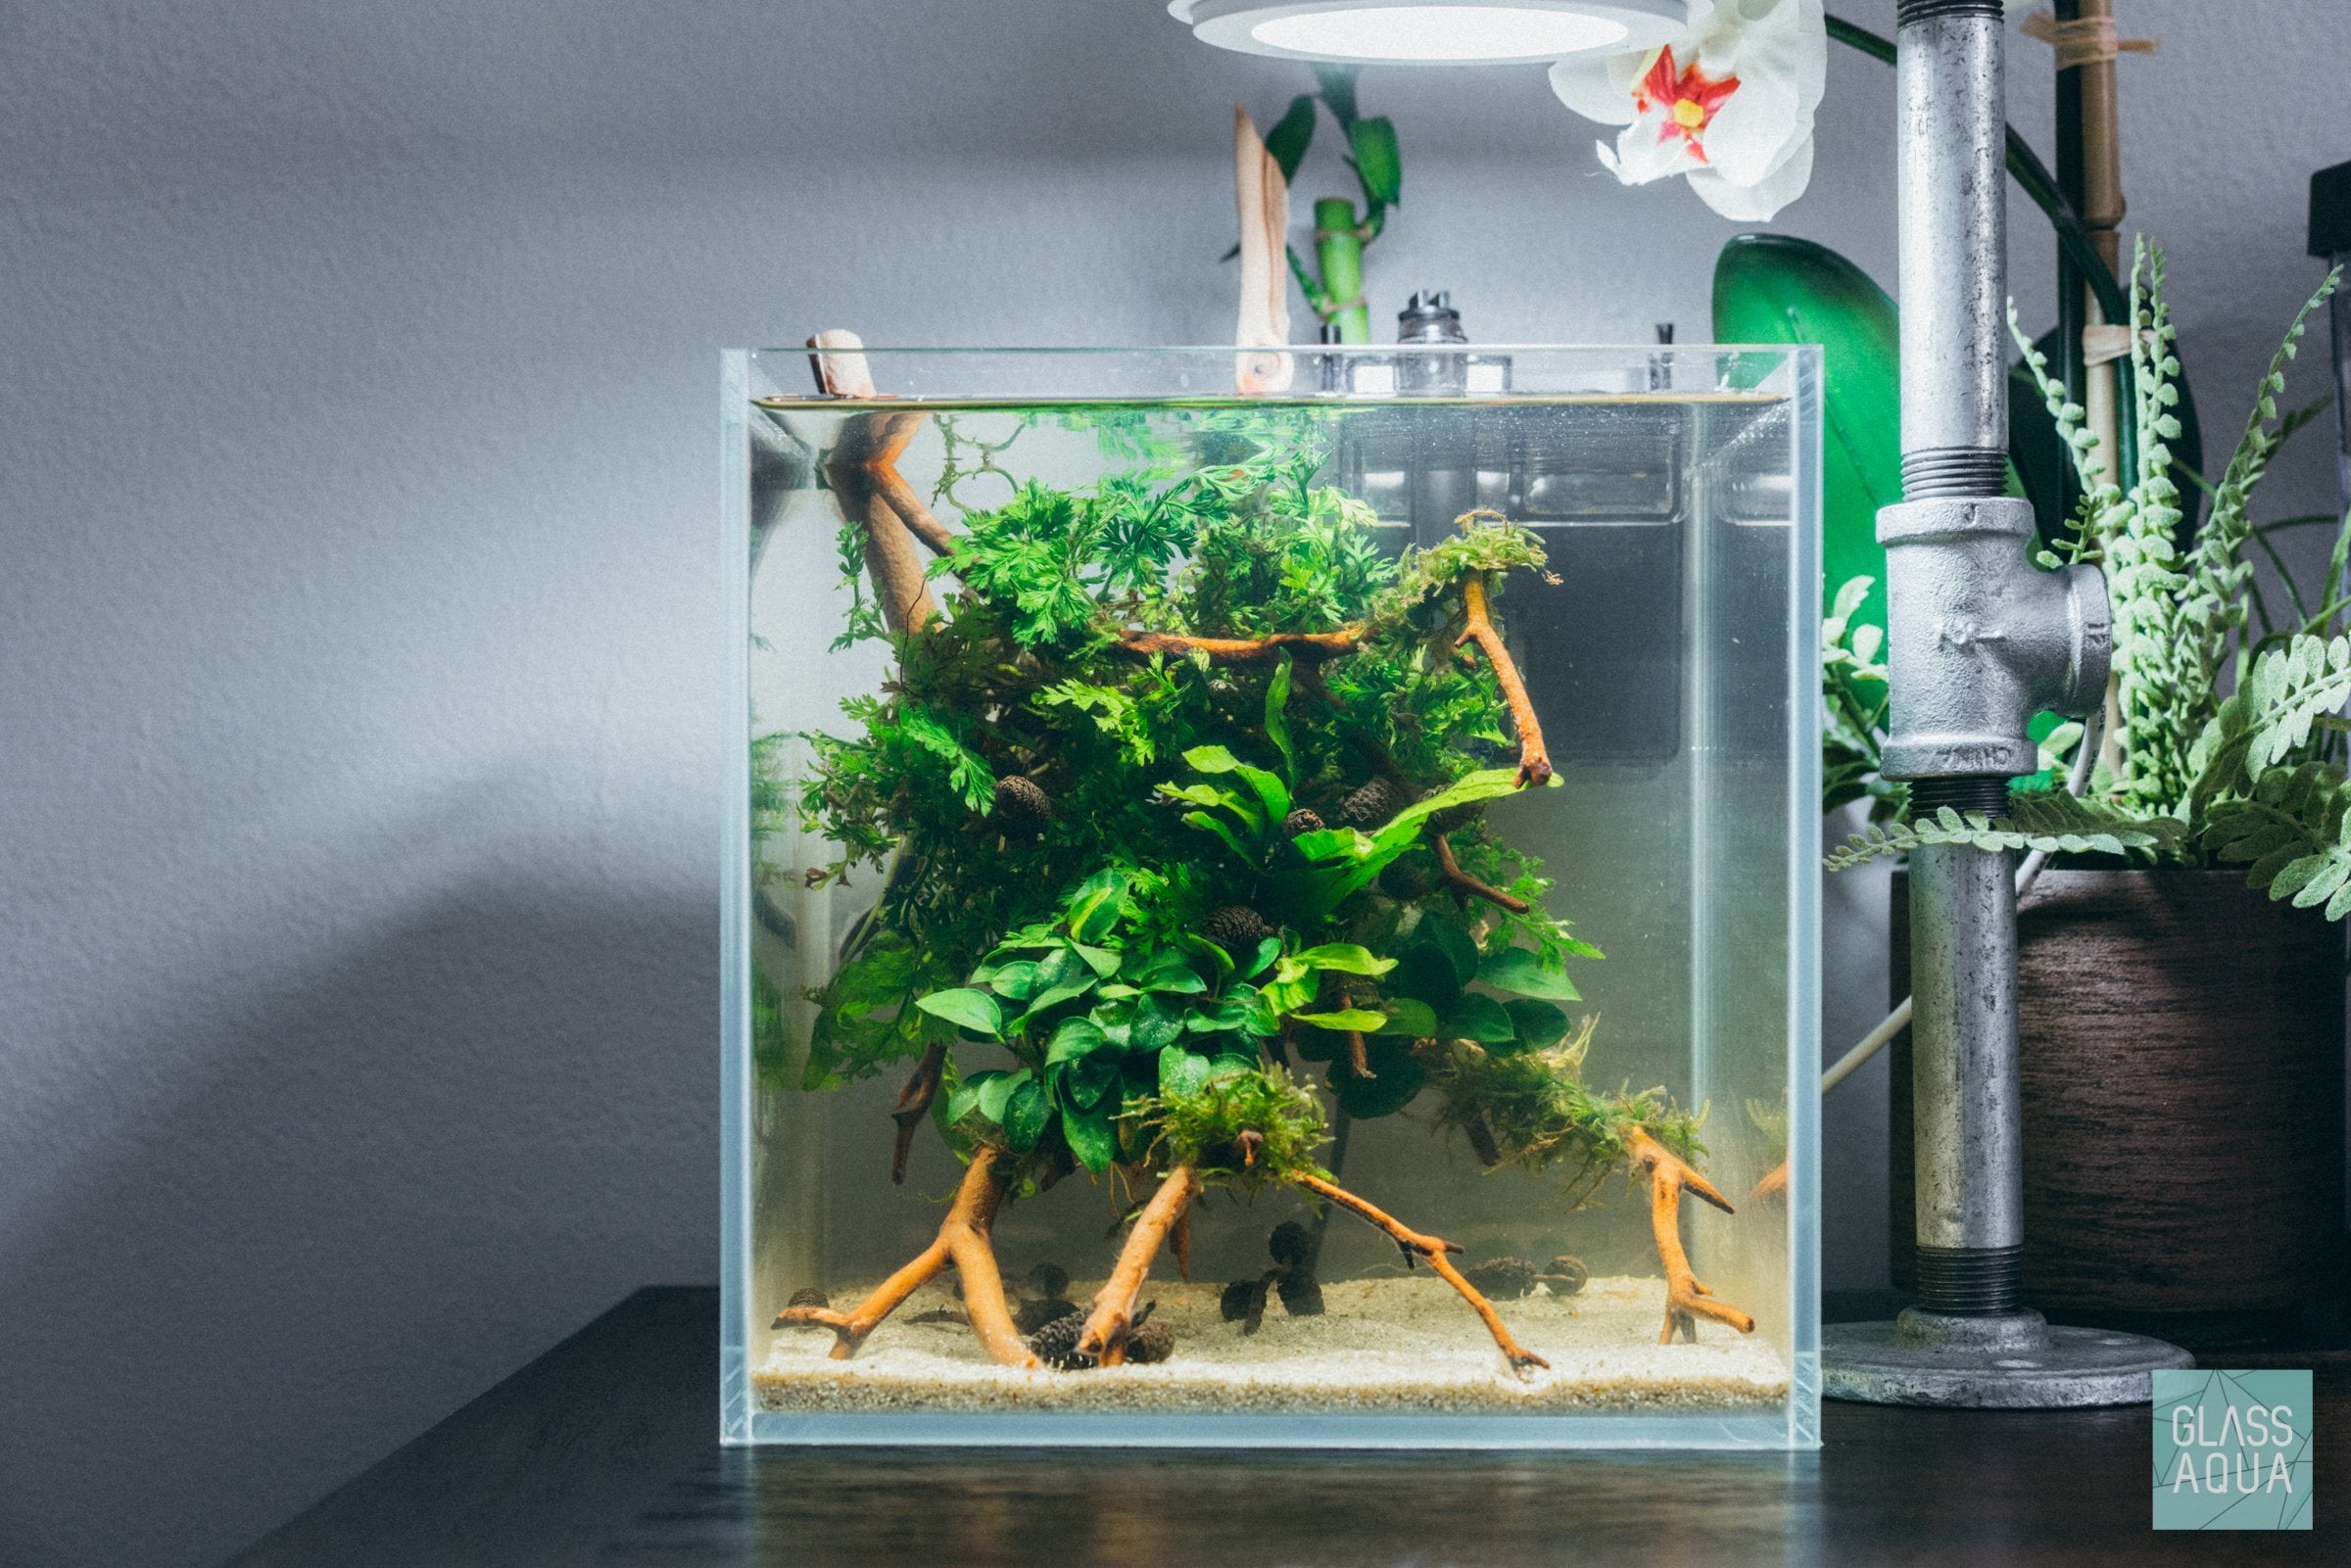 Betta Aquarium Aquascape (5 Gallon planted tank) 